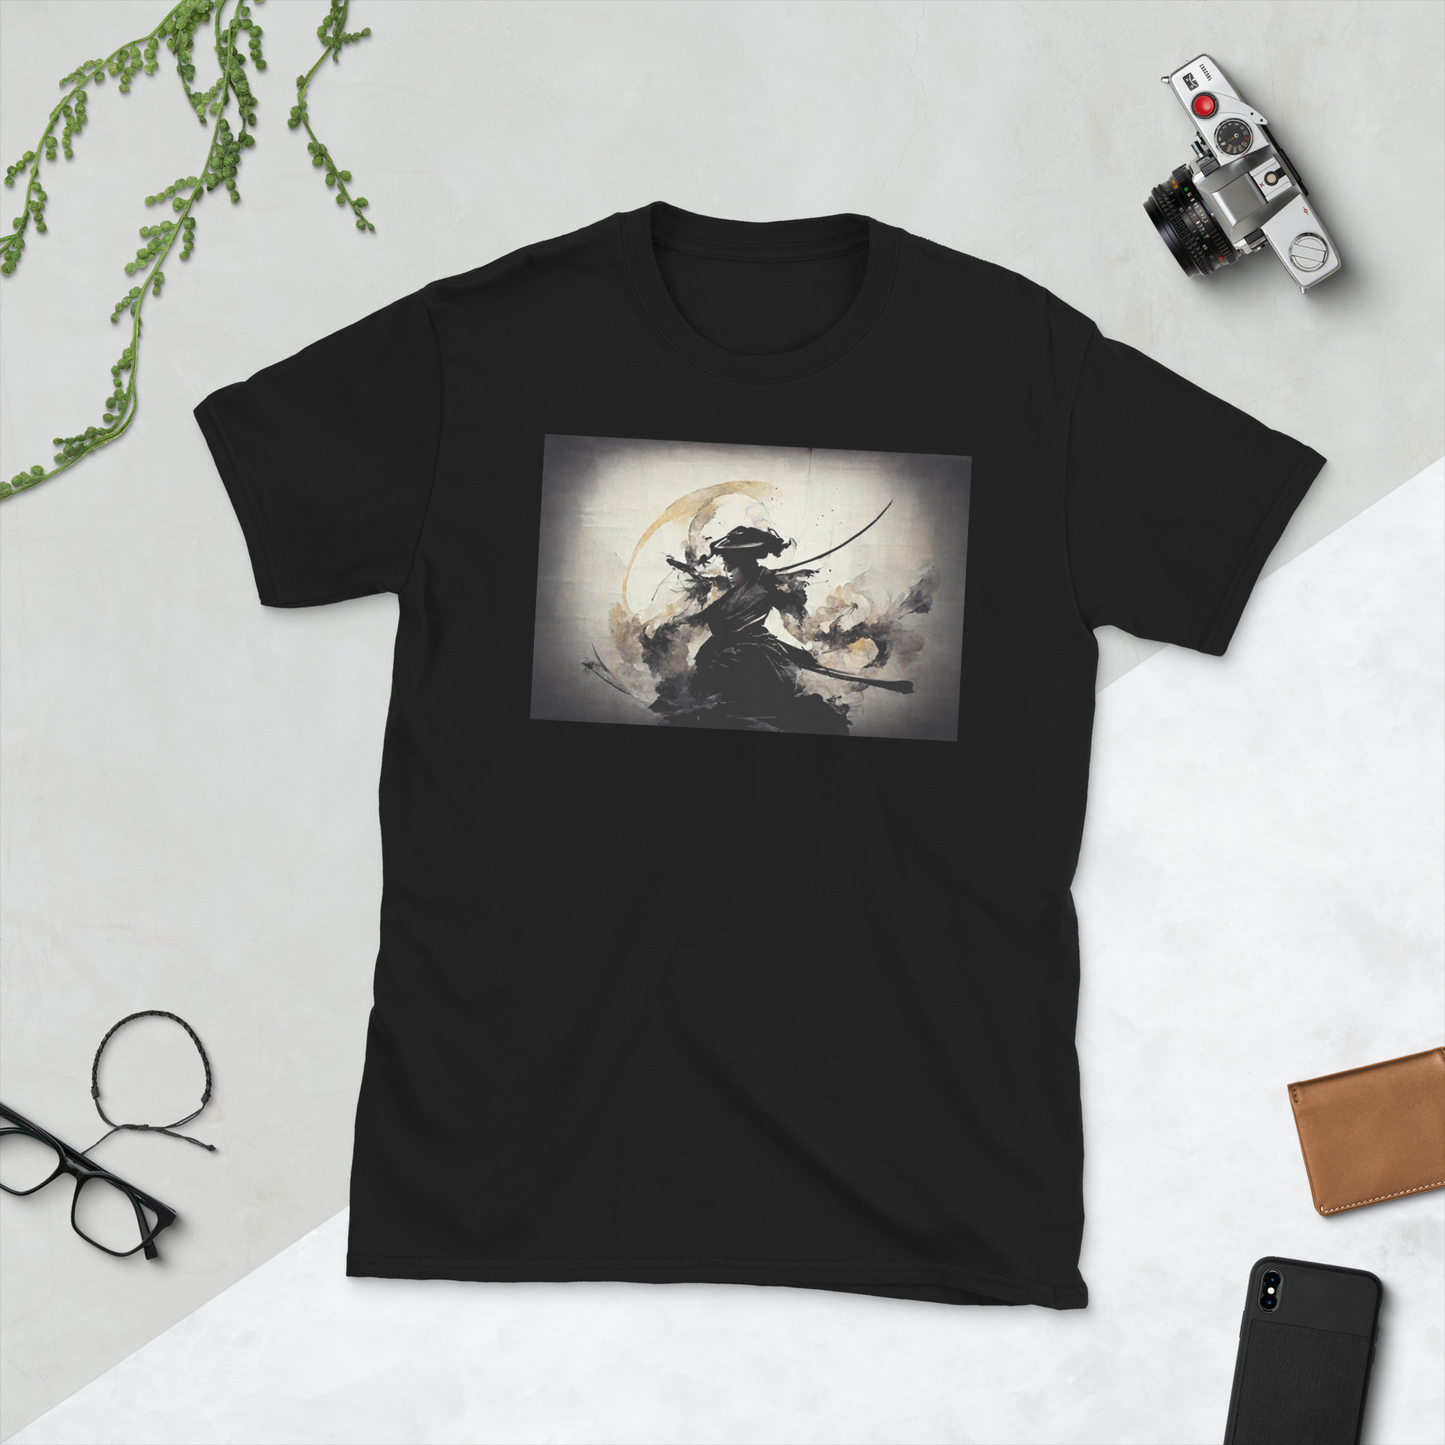 Shadow Samurai Showdown - Short-Sleeve Unisex T-Shirt copy